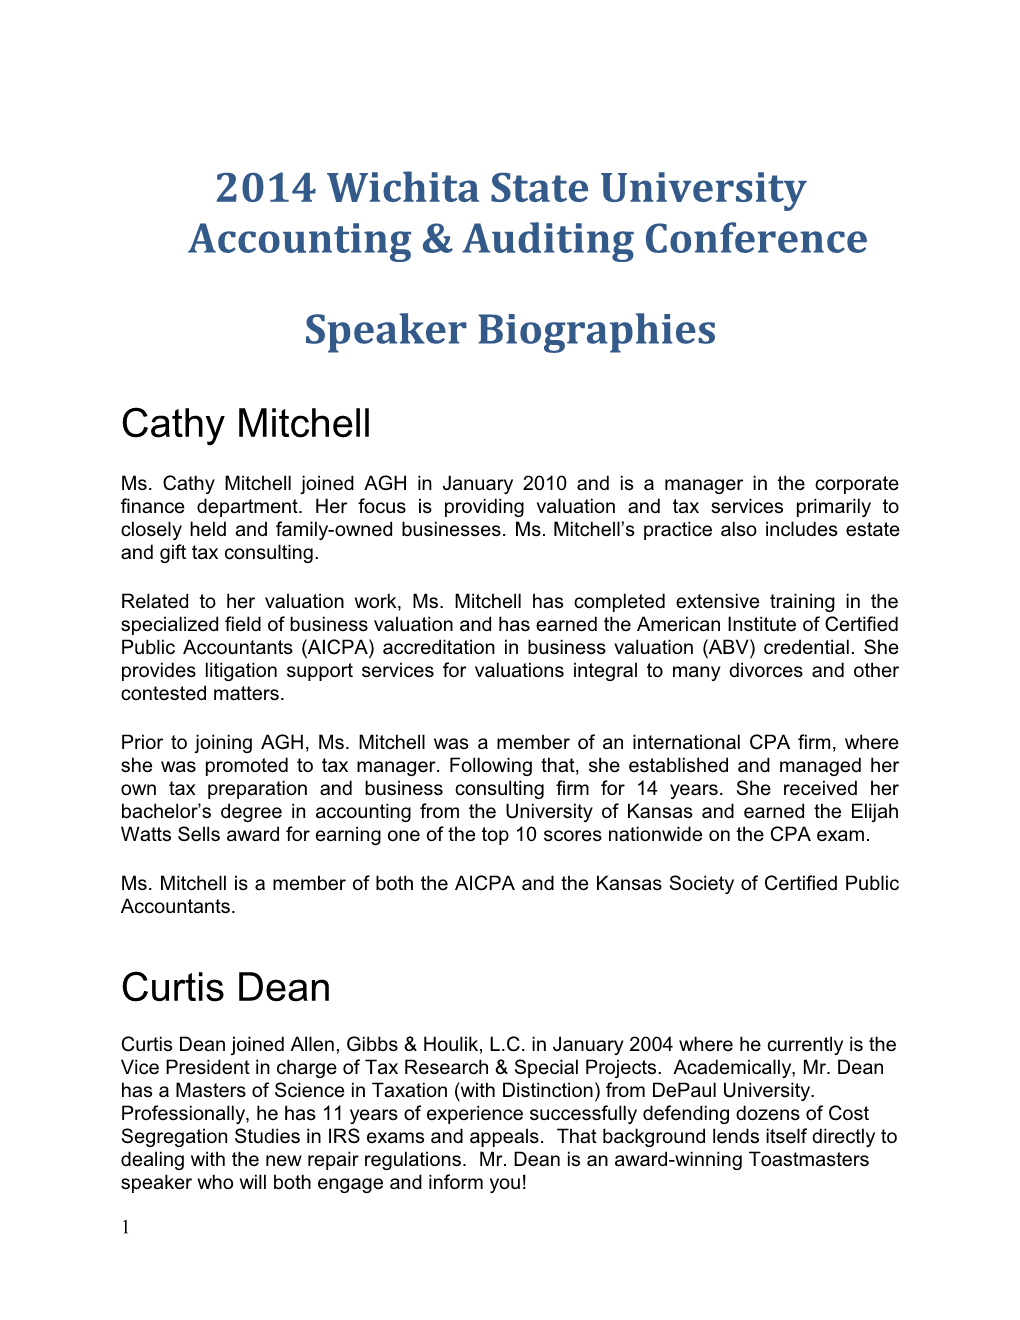 2014 Wichita State University Accounting & Auditing Conference